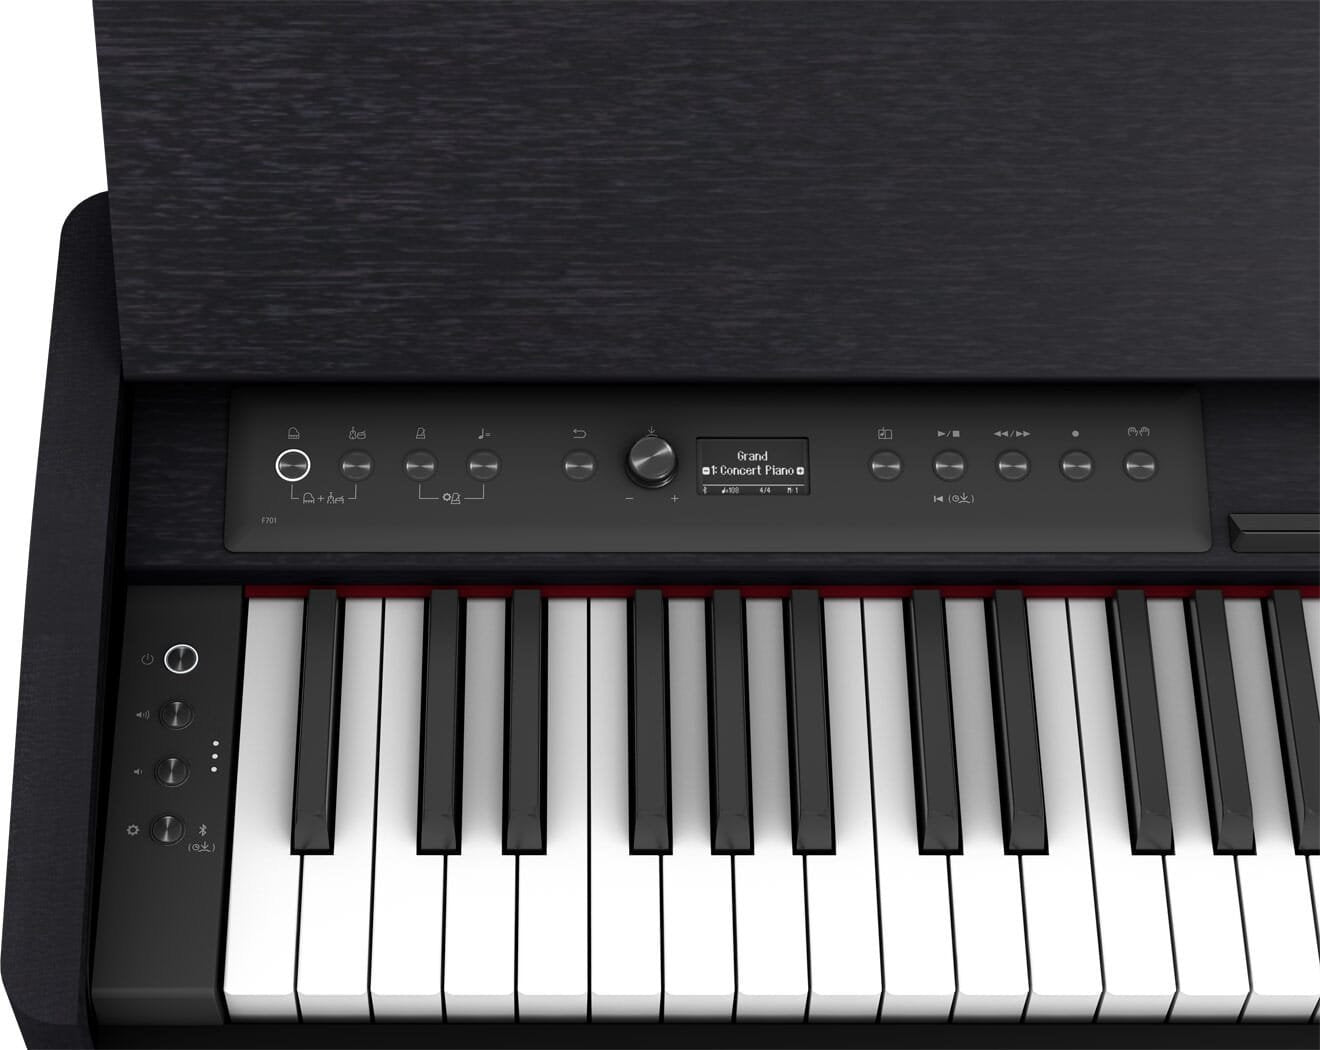 Roland F701 Digital Piano - Classic Black - Includes Stand